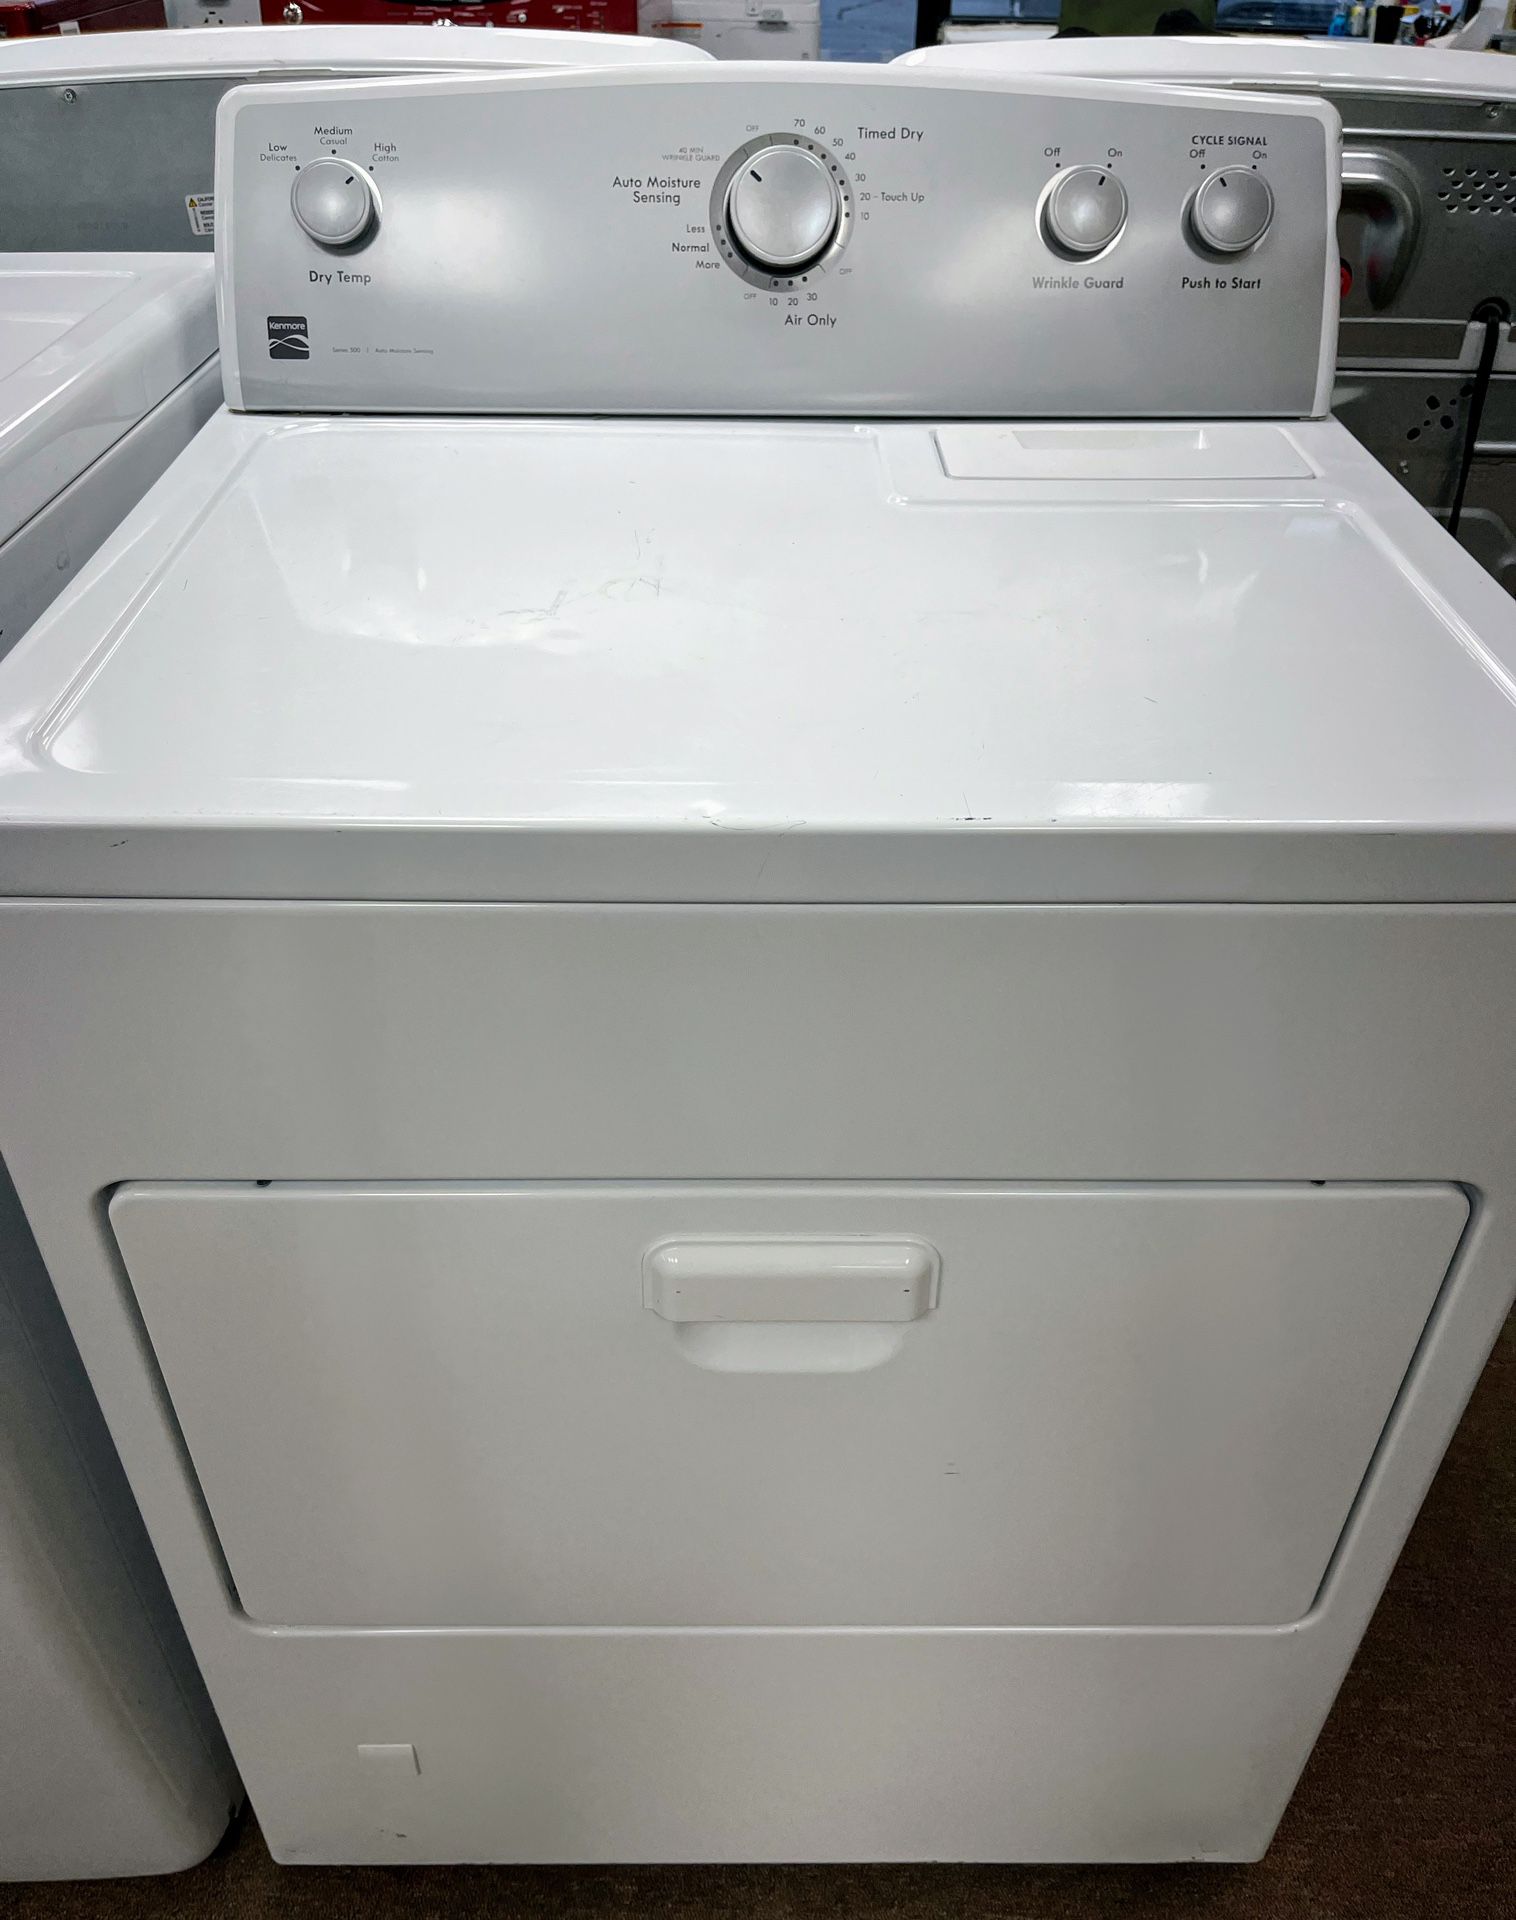 Kenmore-XL capacity Gas Dryer $250